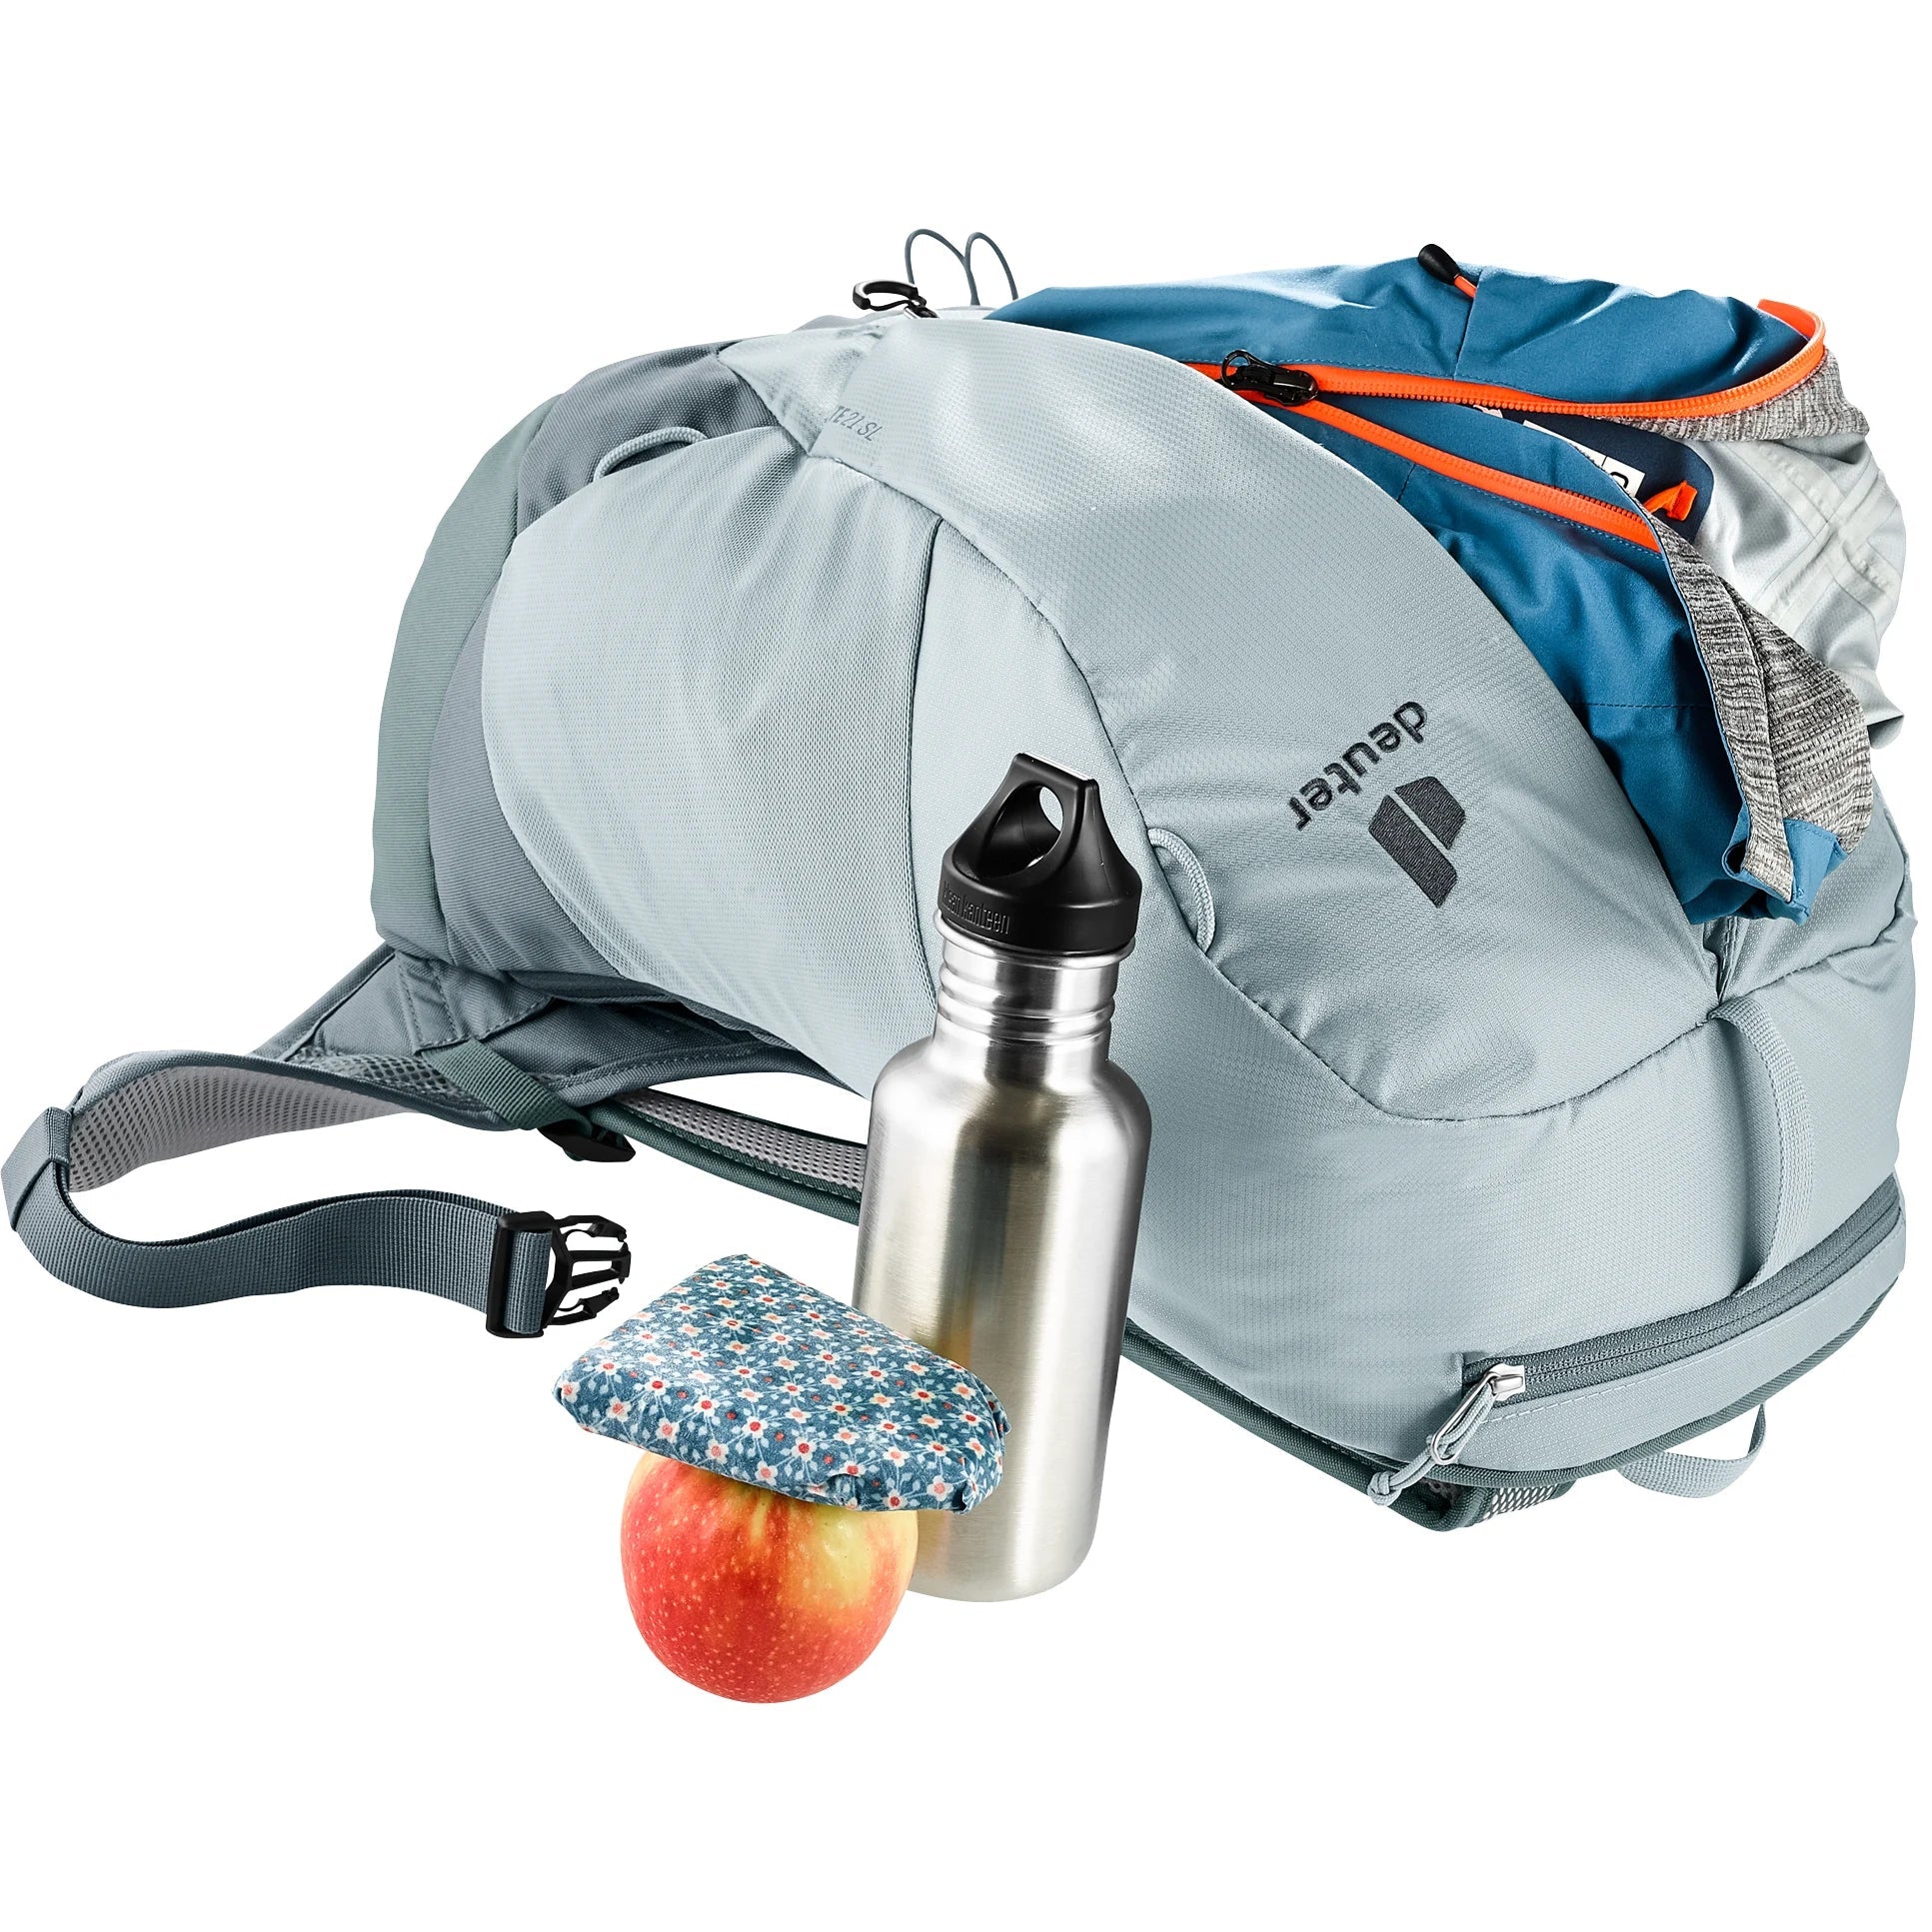 Deuter Travel AC Lite 21 SL hiking backpack 50 cm - caspia-pepper